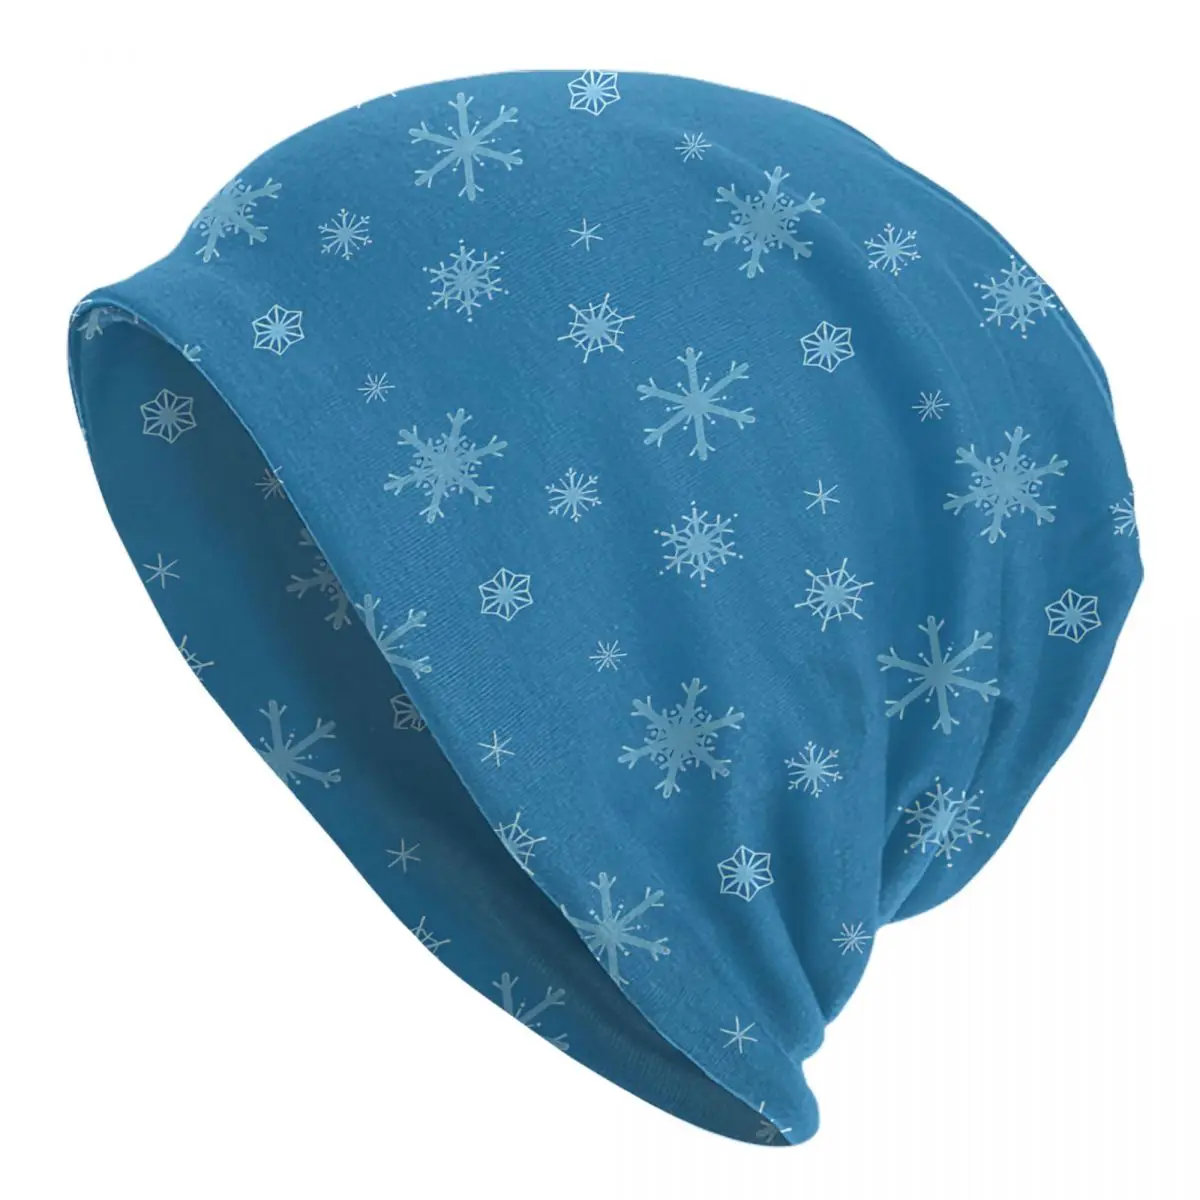 

Bonnet Hats Snowflake Pattern Men Women's Thin Hat Blue Autumn Spring Warm Cap Street Skullies Beanies Caps